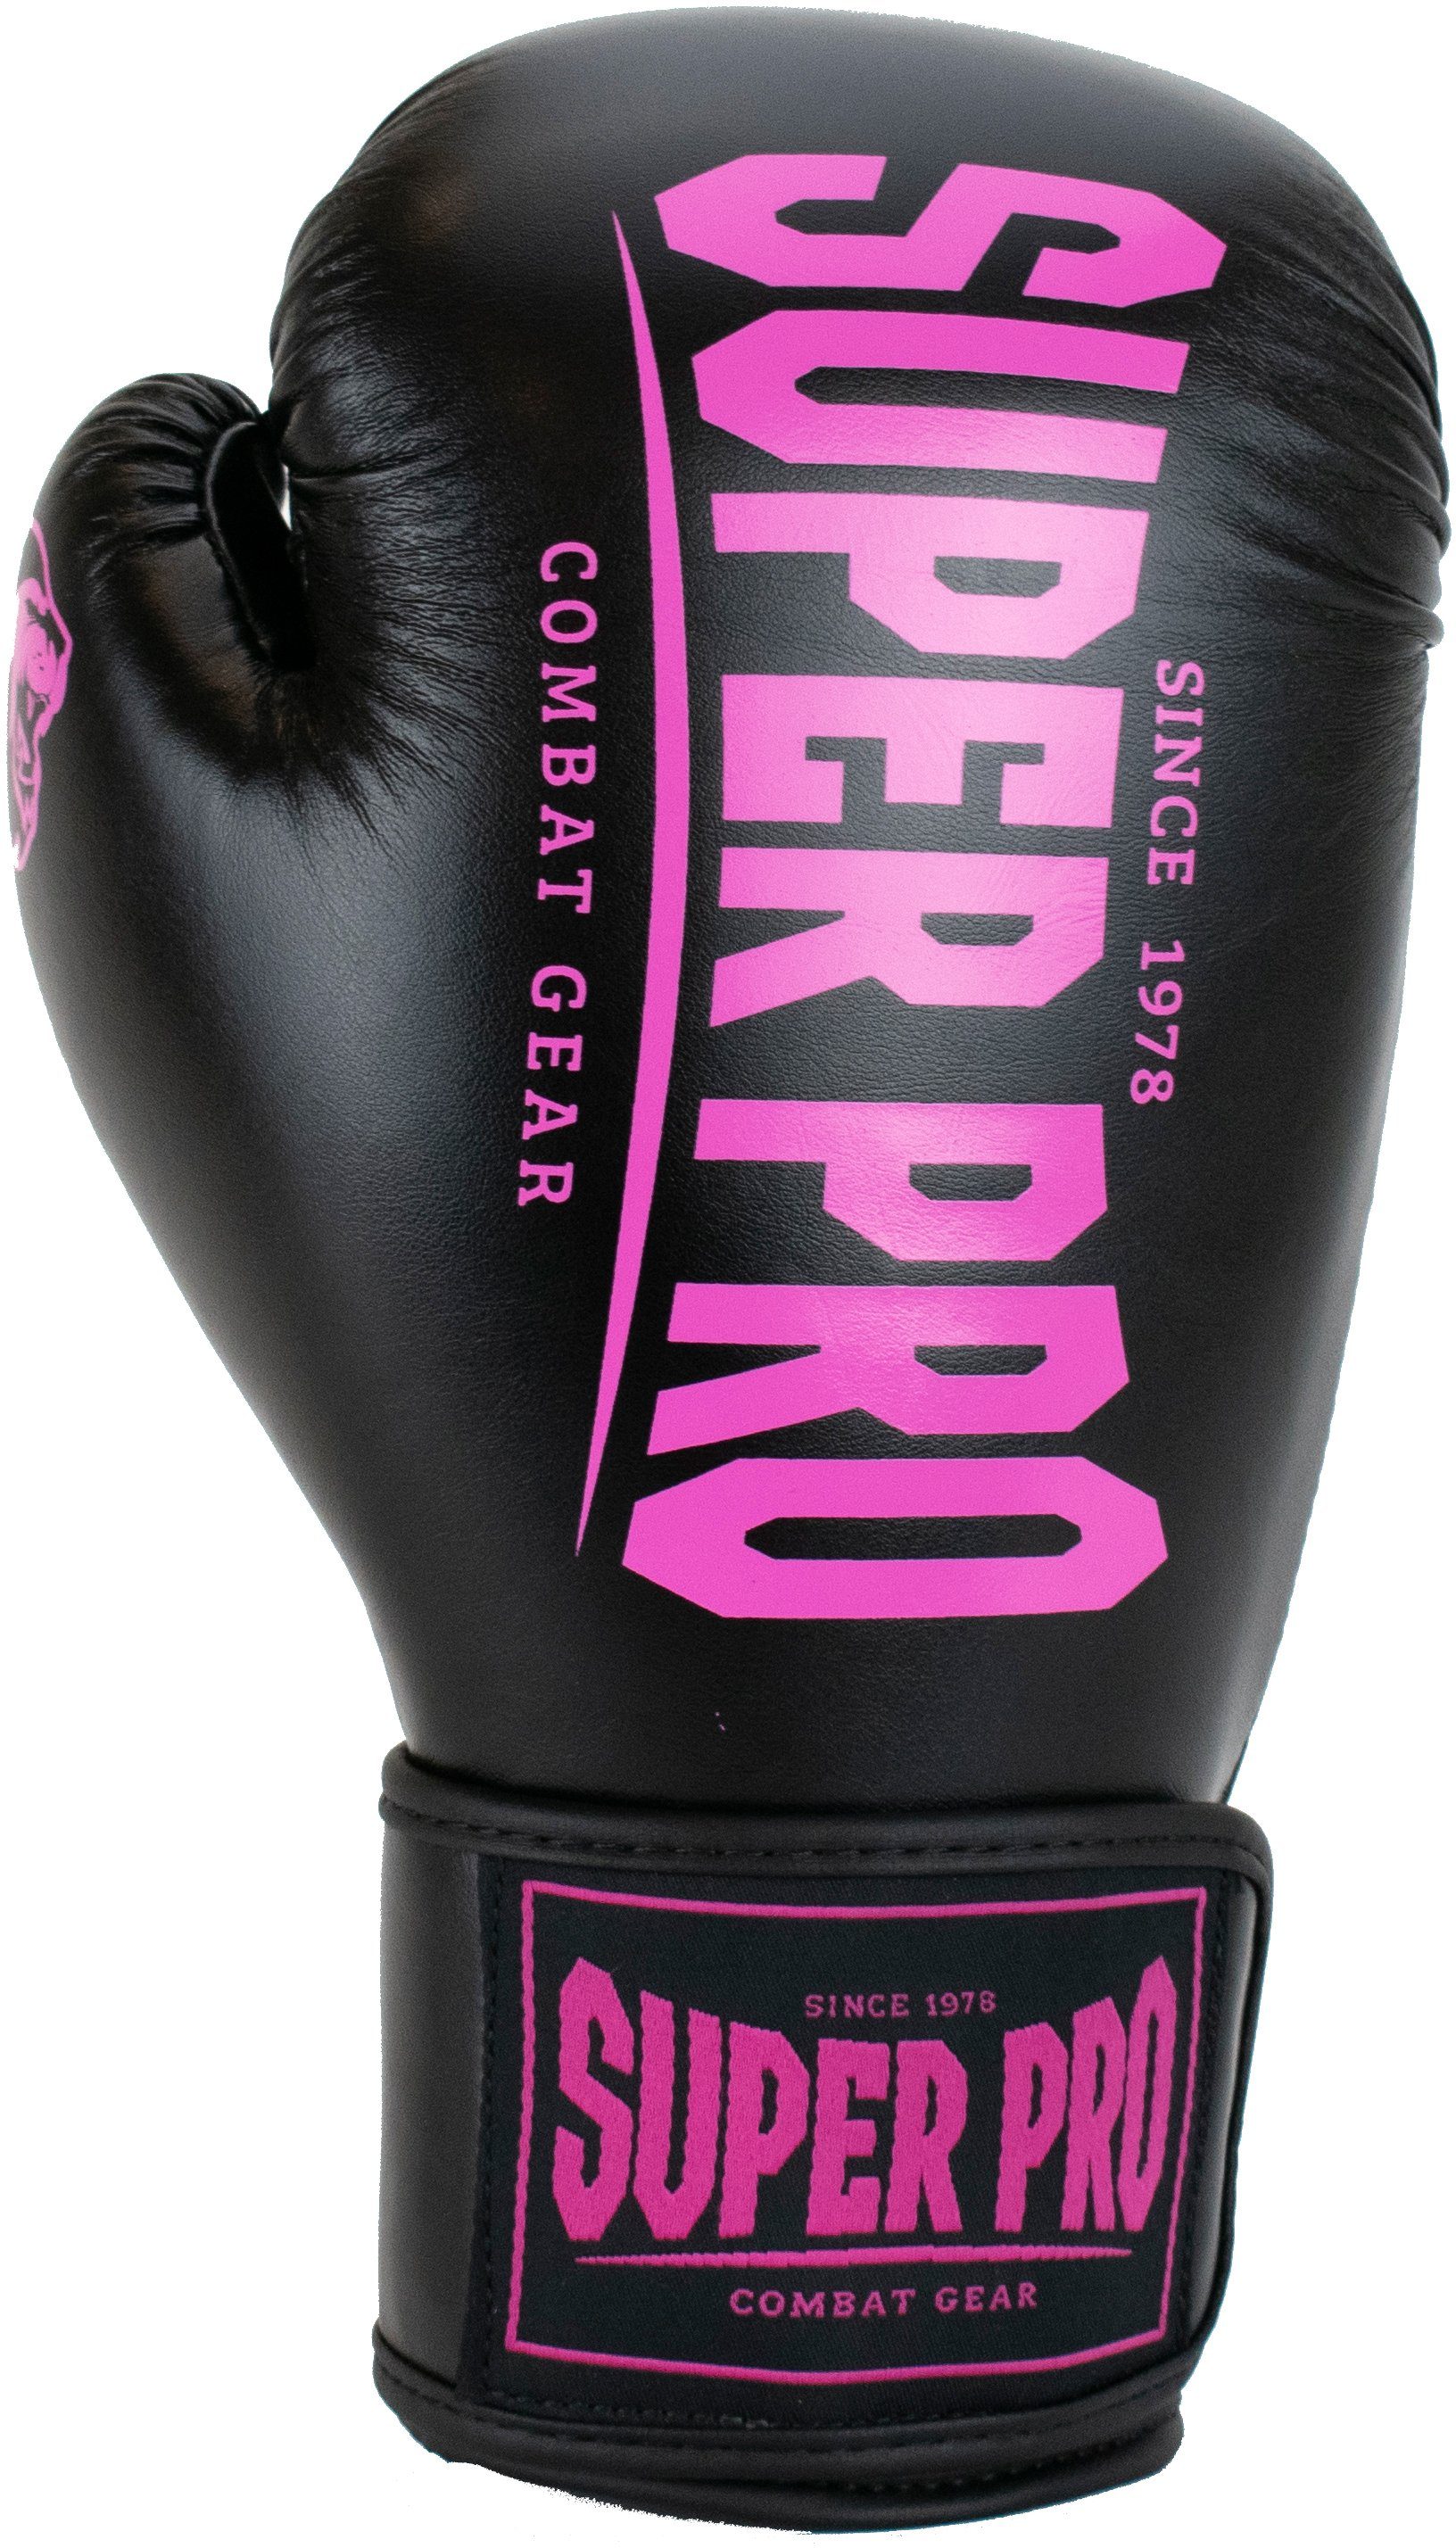 Super Champ pink-schwarz Pro Boxhandschuhe